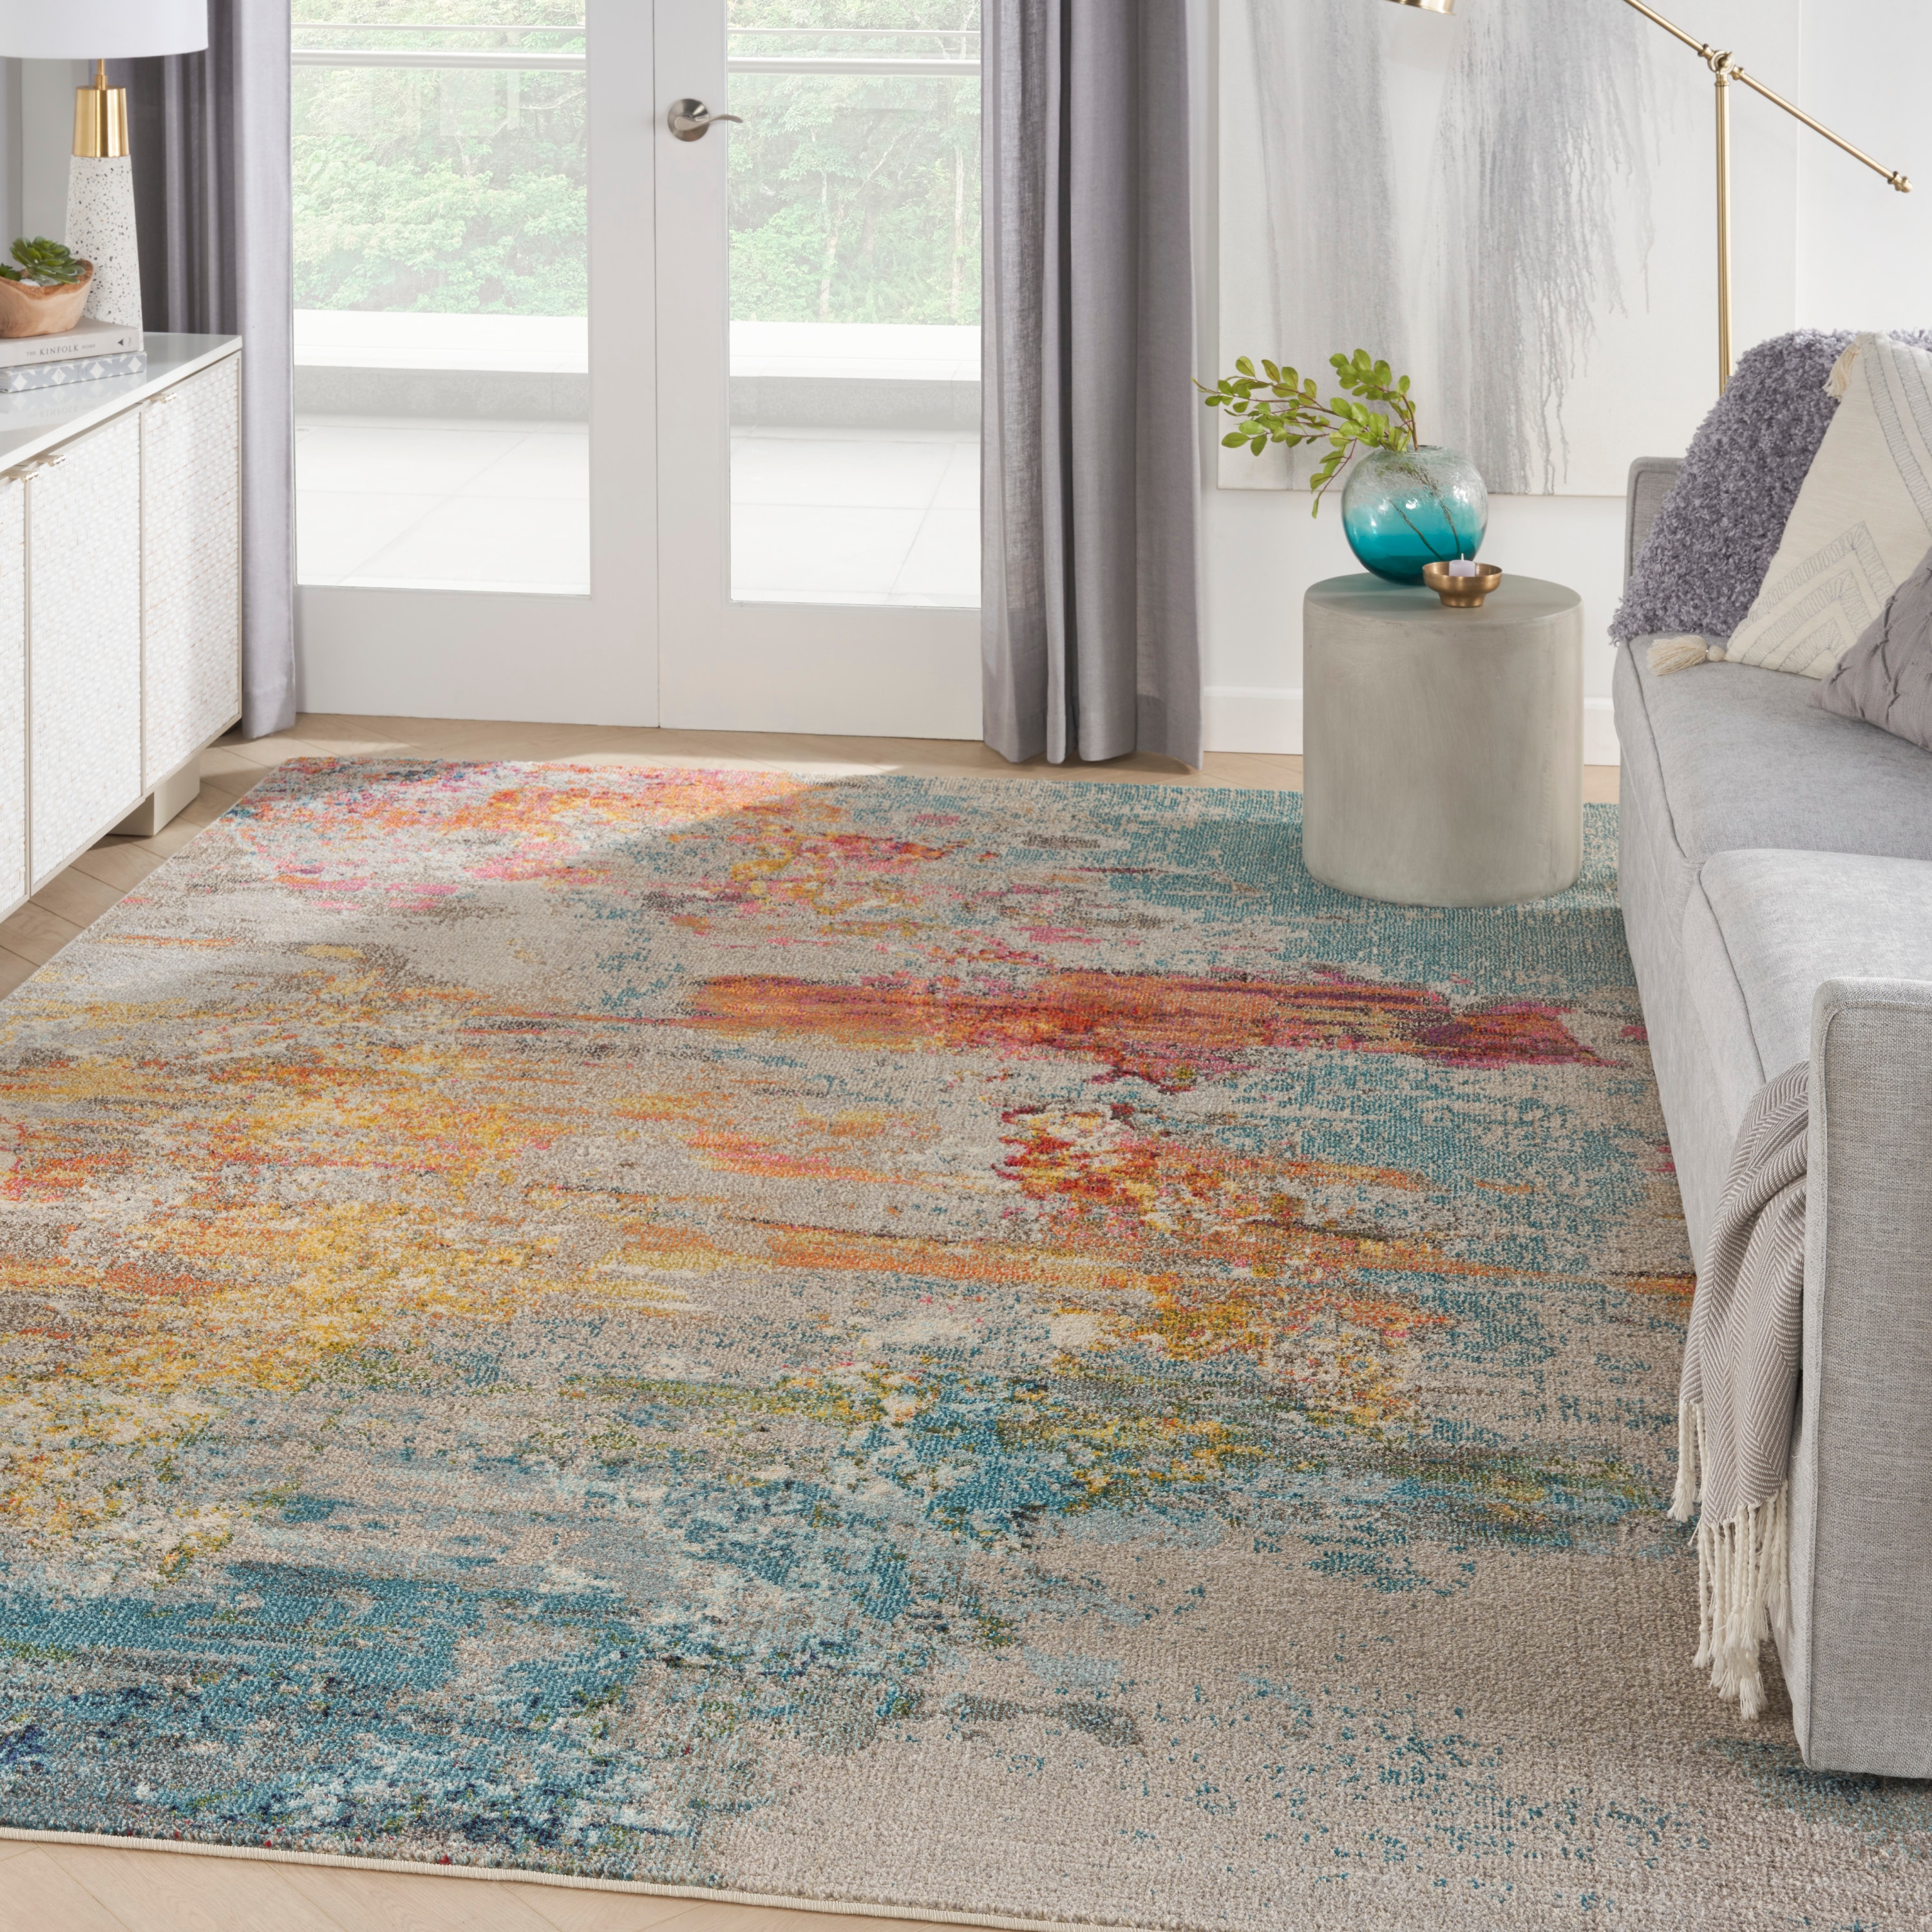 Yoga Round Floor Mat Bedroom Carpet Area Rugs Beautiful Abstract Swirl Pattern 